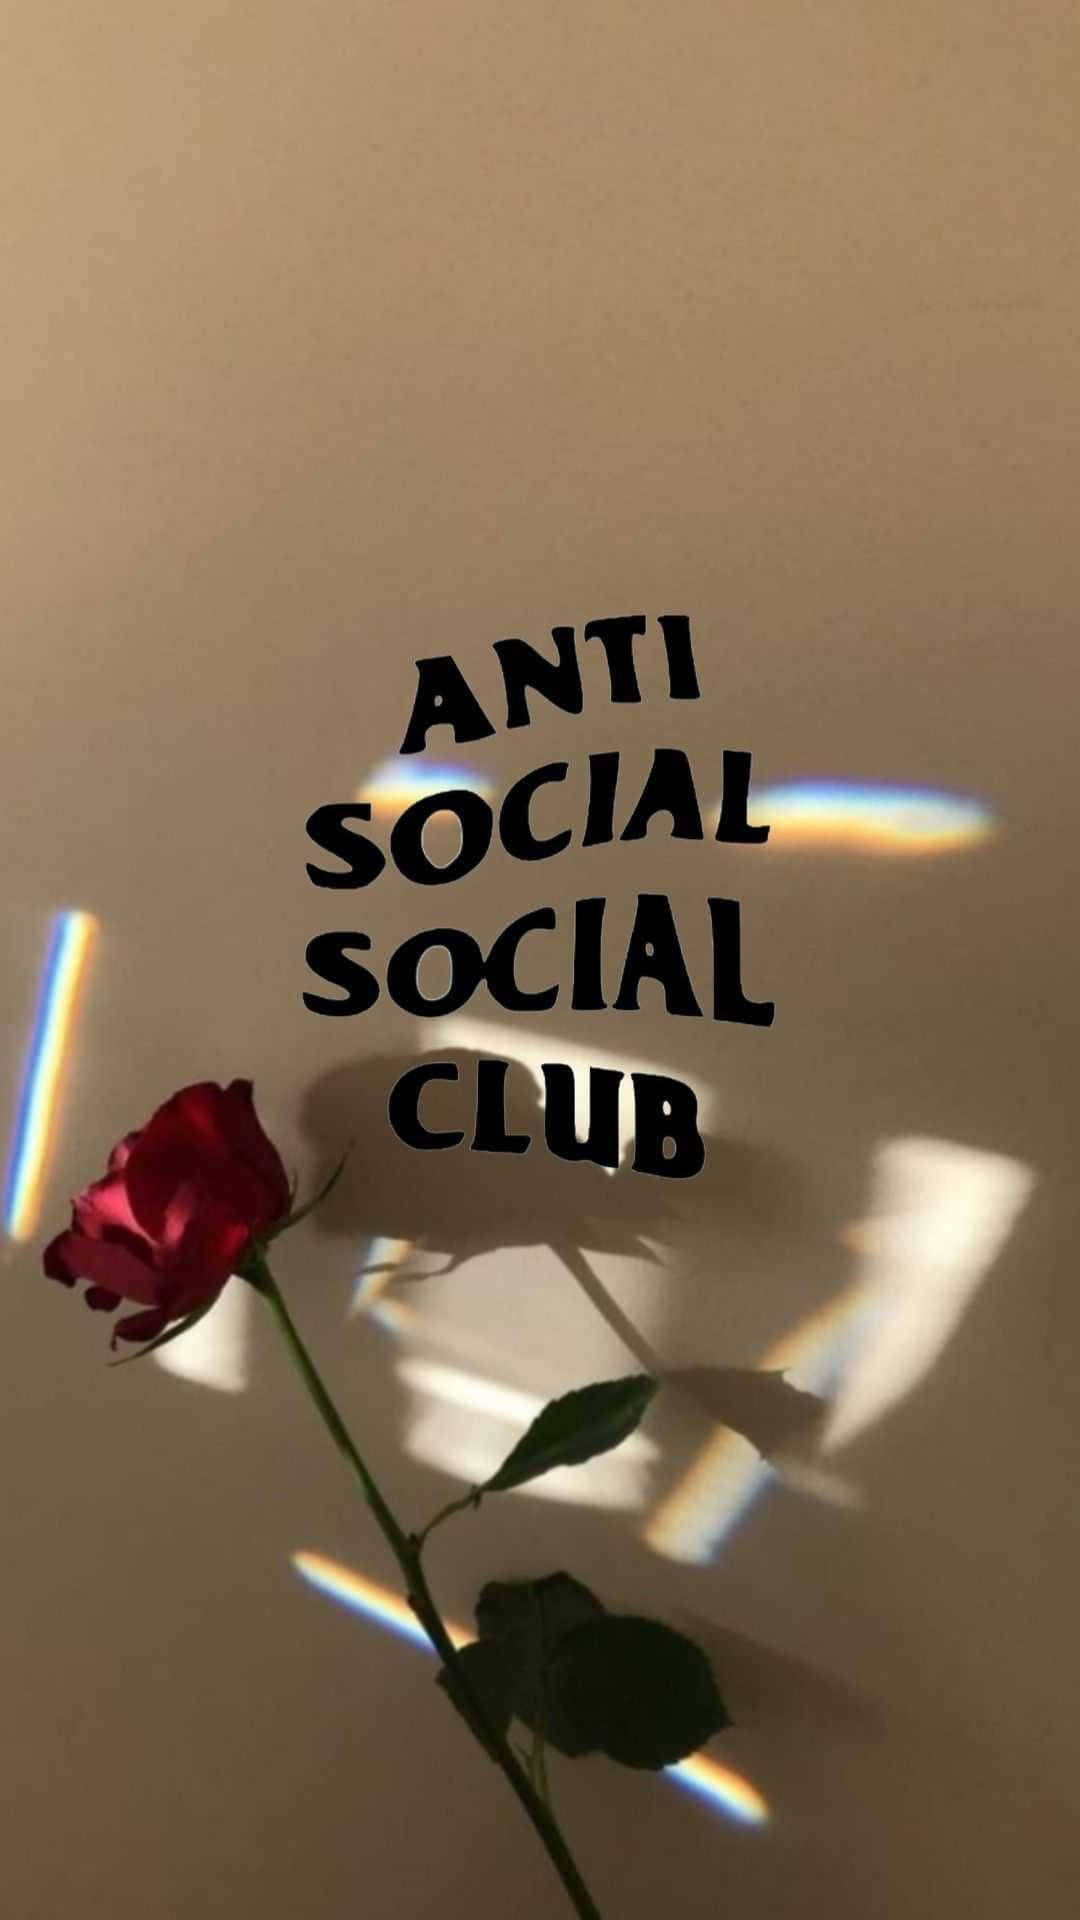 Download Red Rose And Anti Social Club iPhone Wallpaper